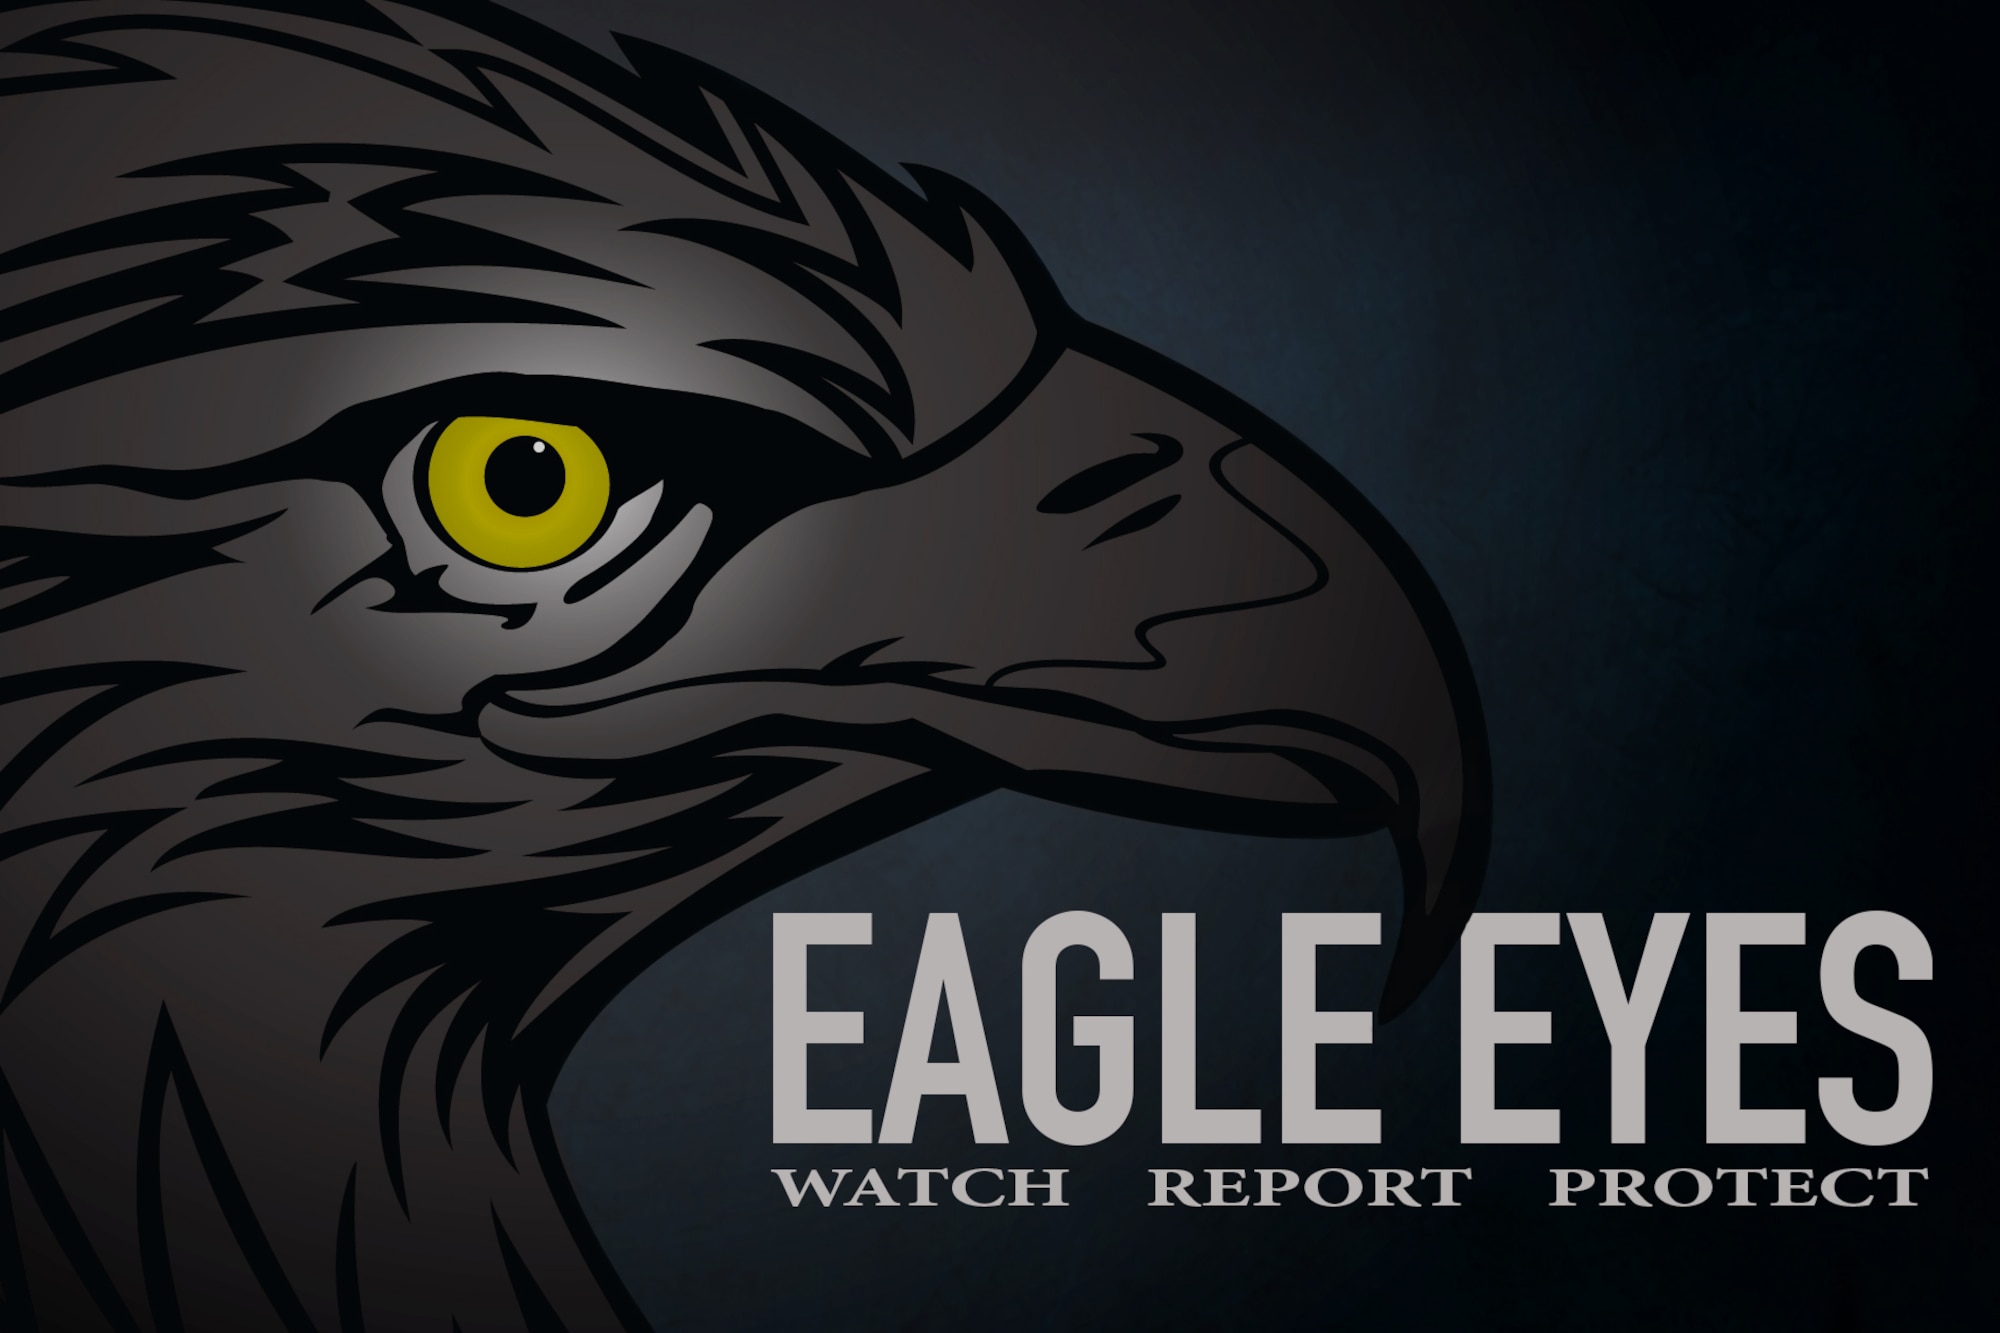 Eagle Eyes Tattoo Designs - wide 8